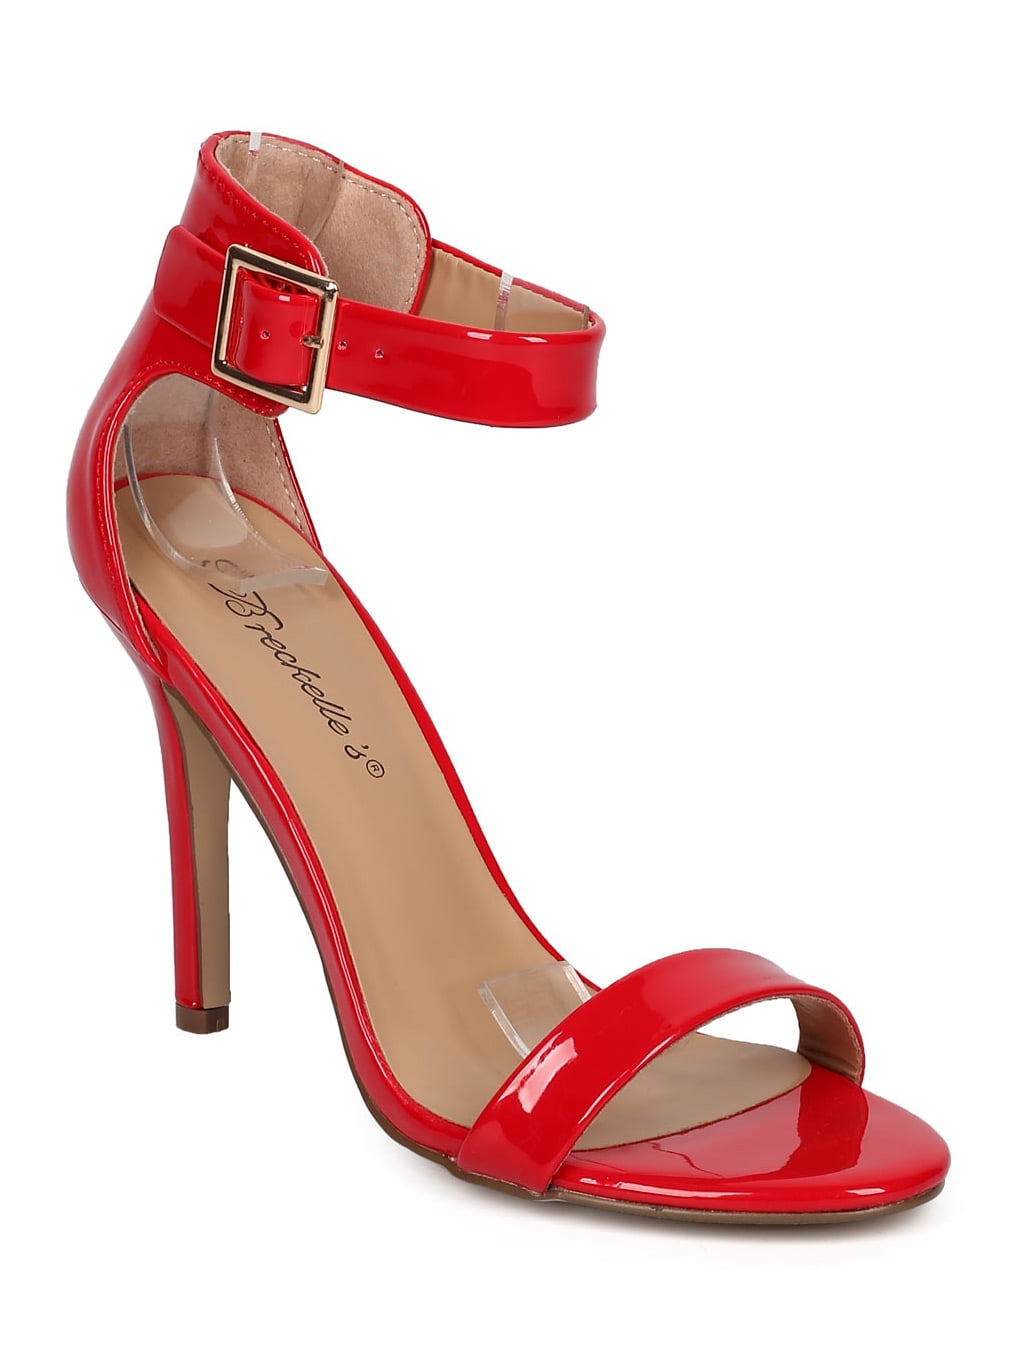 Sydney41 Classic High Heel Ankle Strap Dress Sandal Women's Shoes 